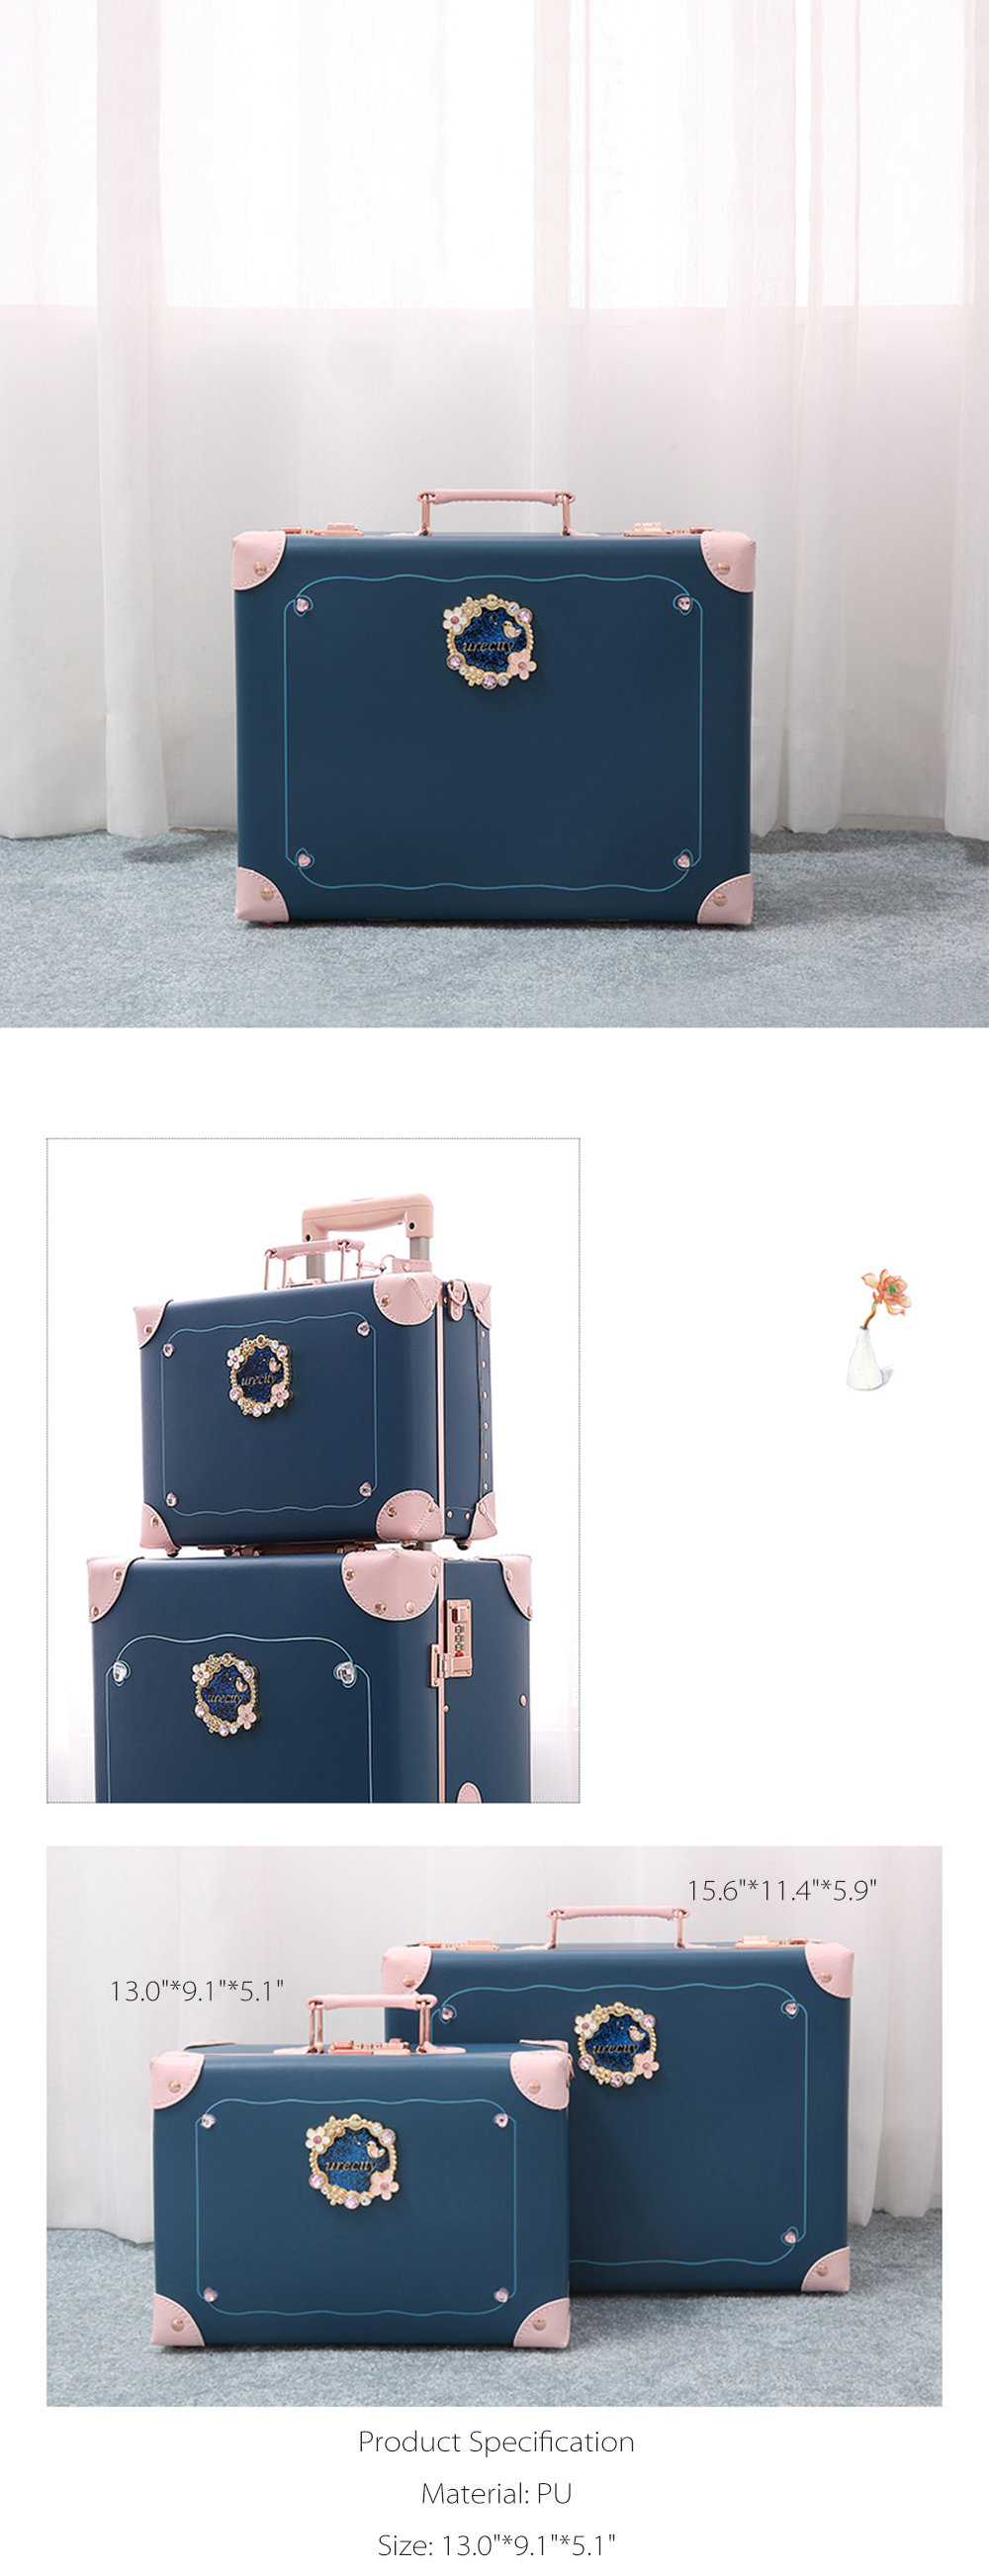 urecity vintage suitcase set for women, vintage luggage sets for women 2  piece, cute designer trunk luggage, retro suit case Rose White – urecity- luggage